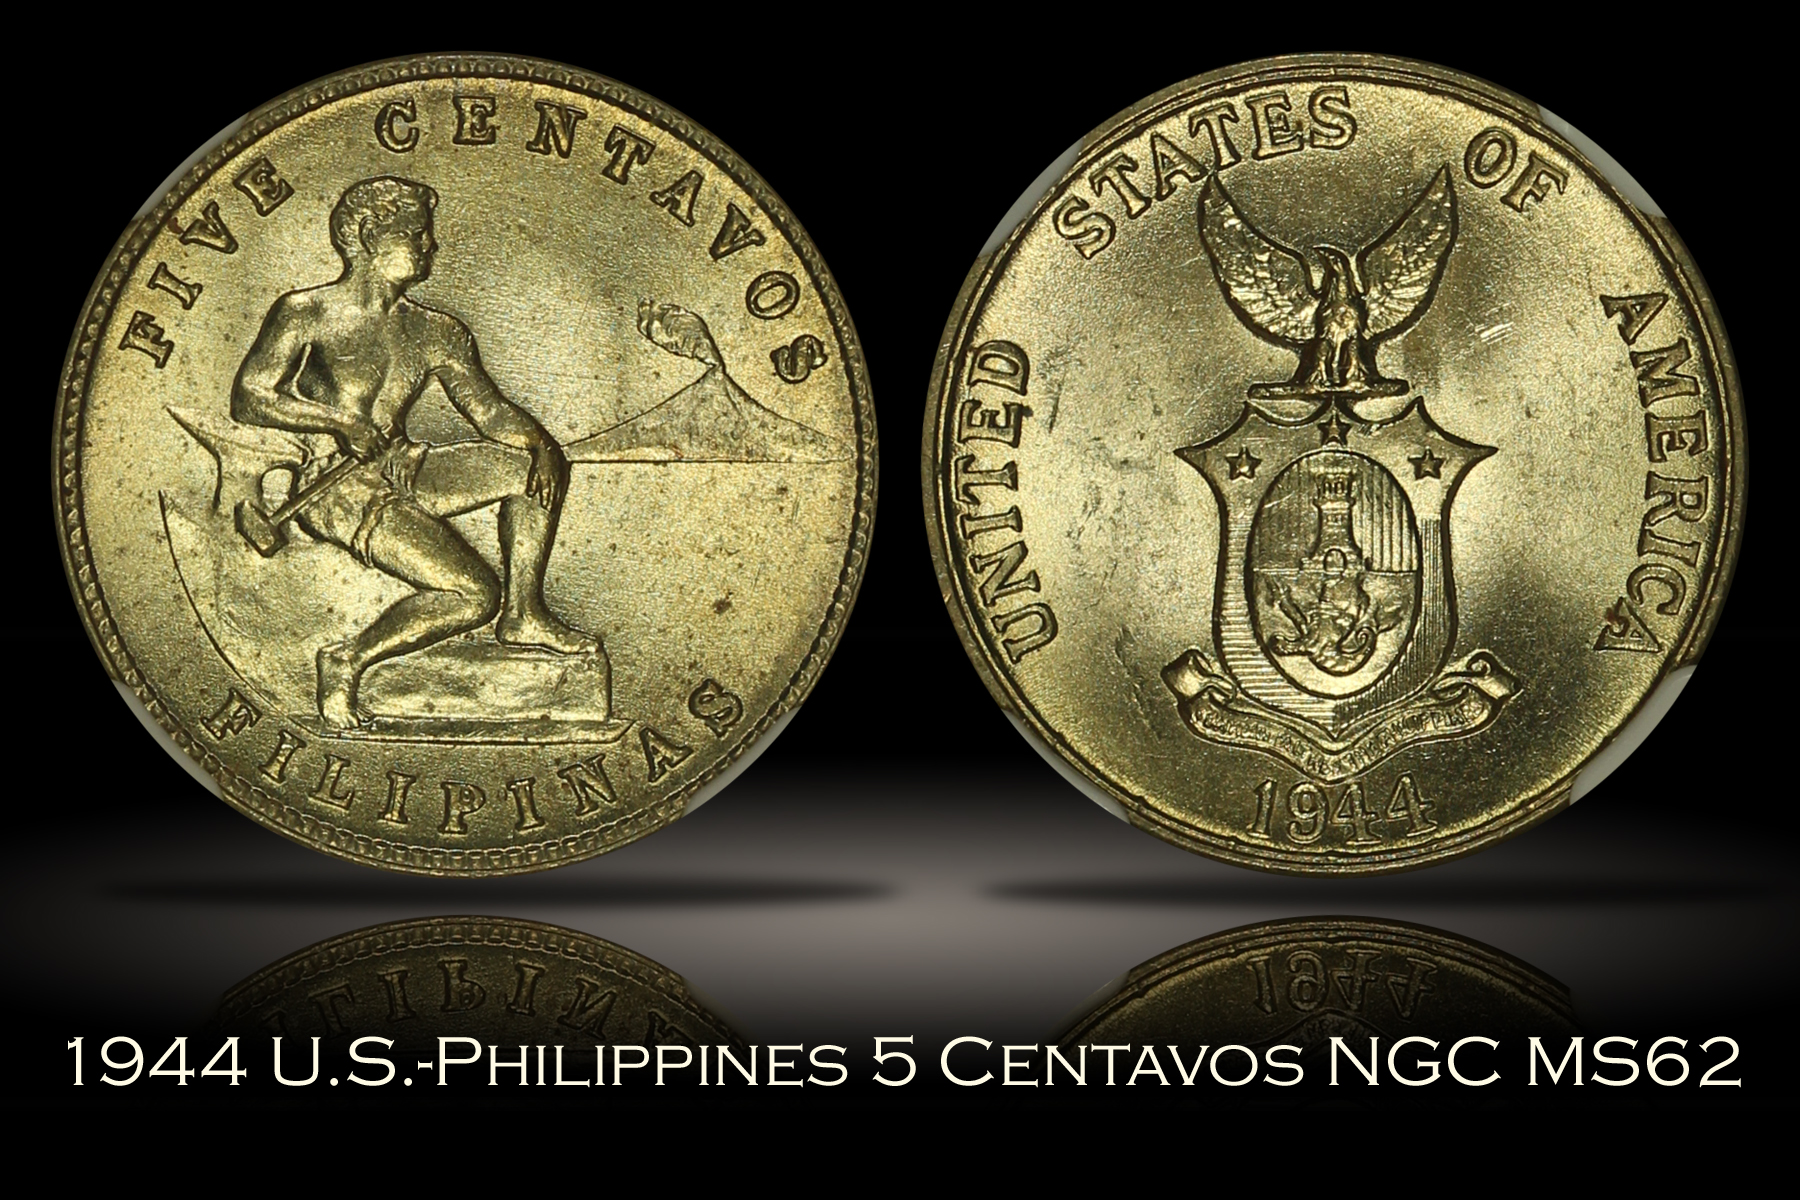 1944 U.S.-Philippines 5 Centavos NGC MS62